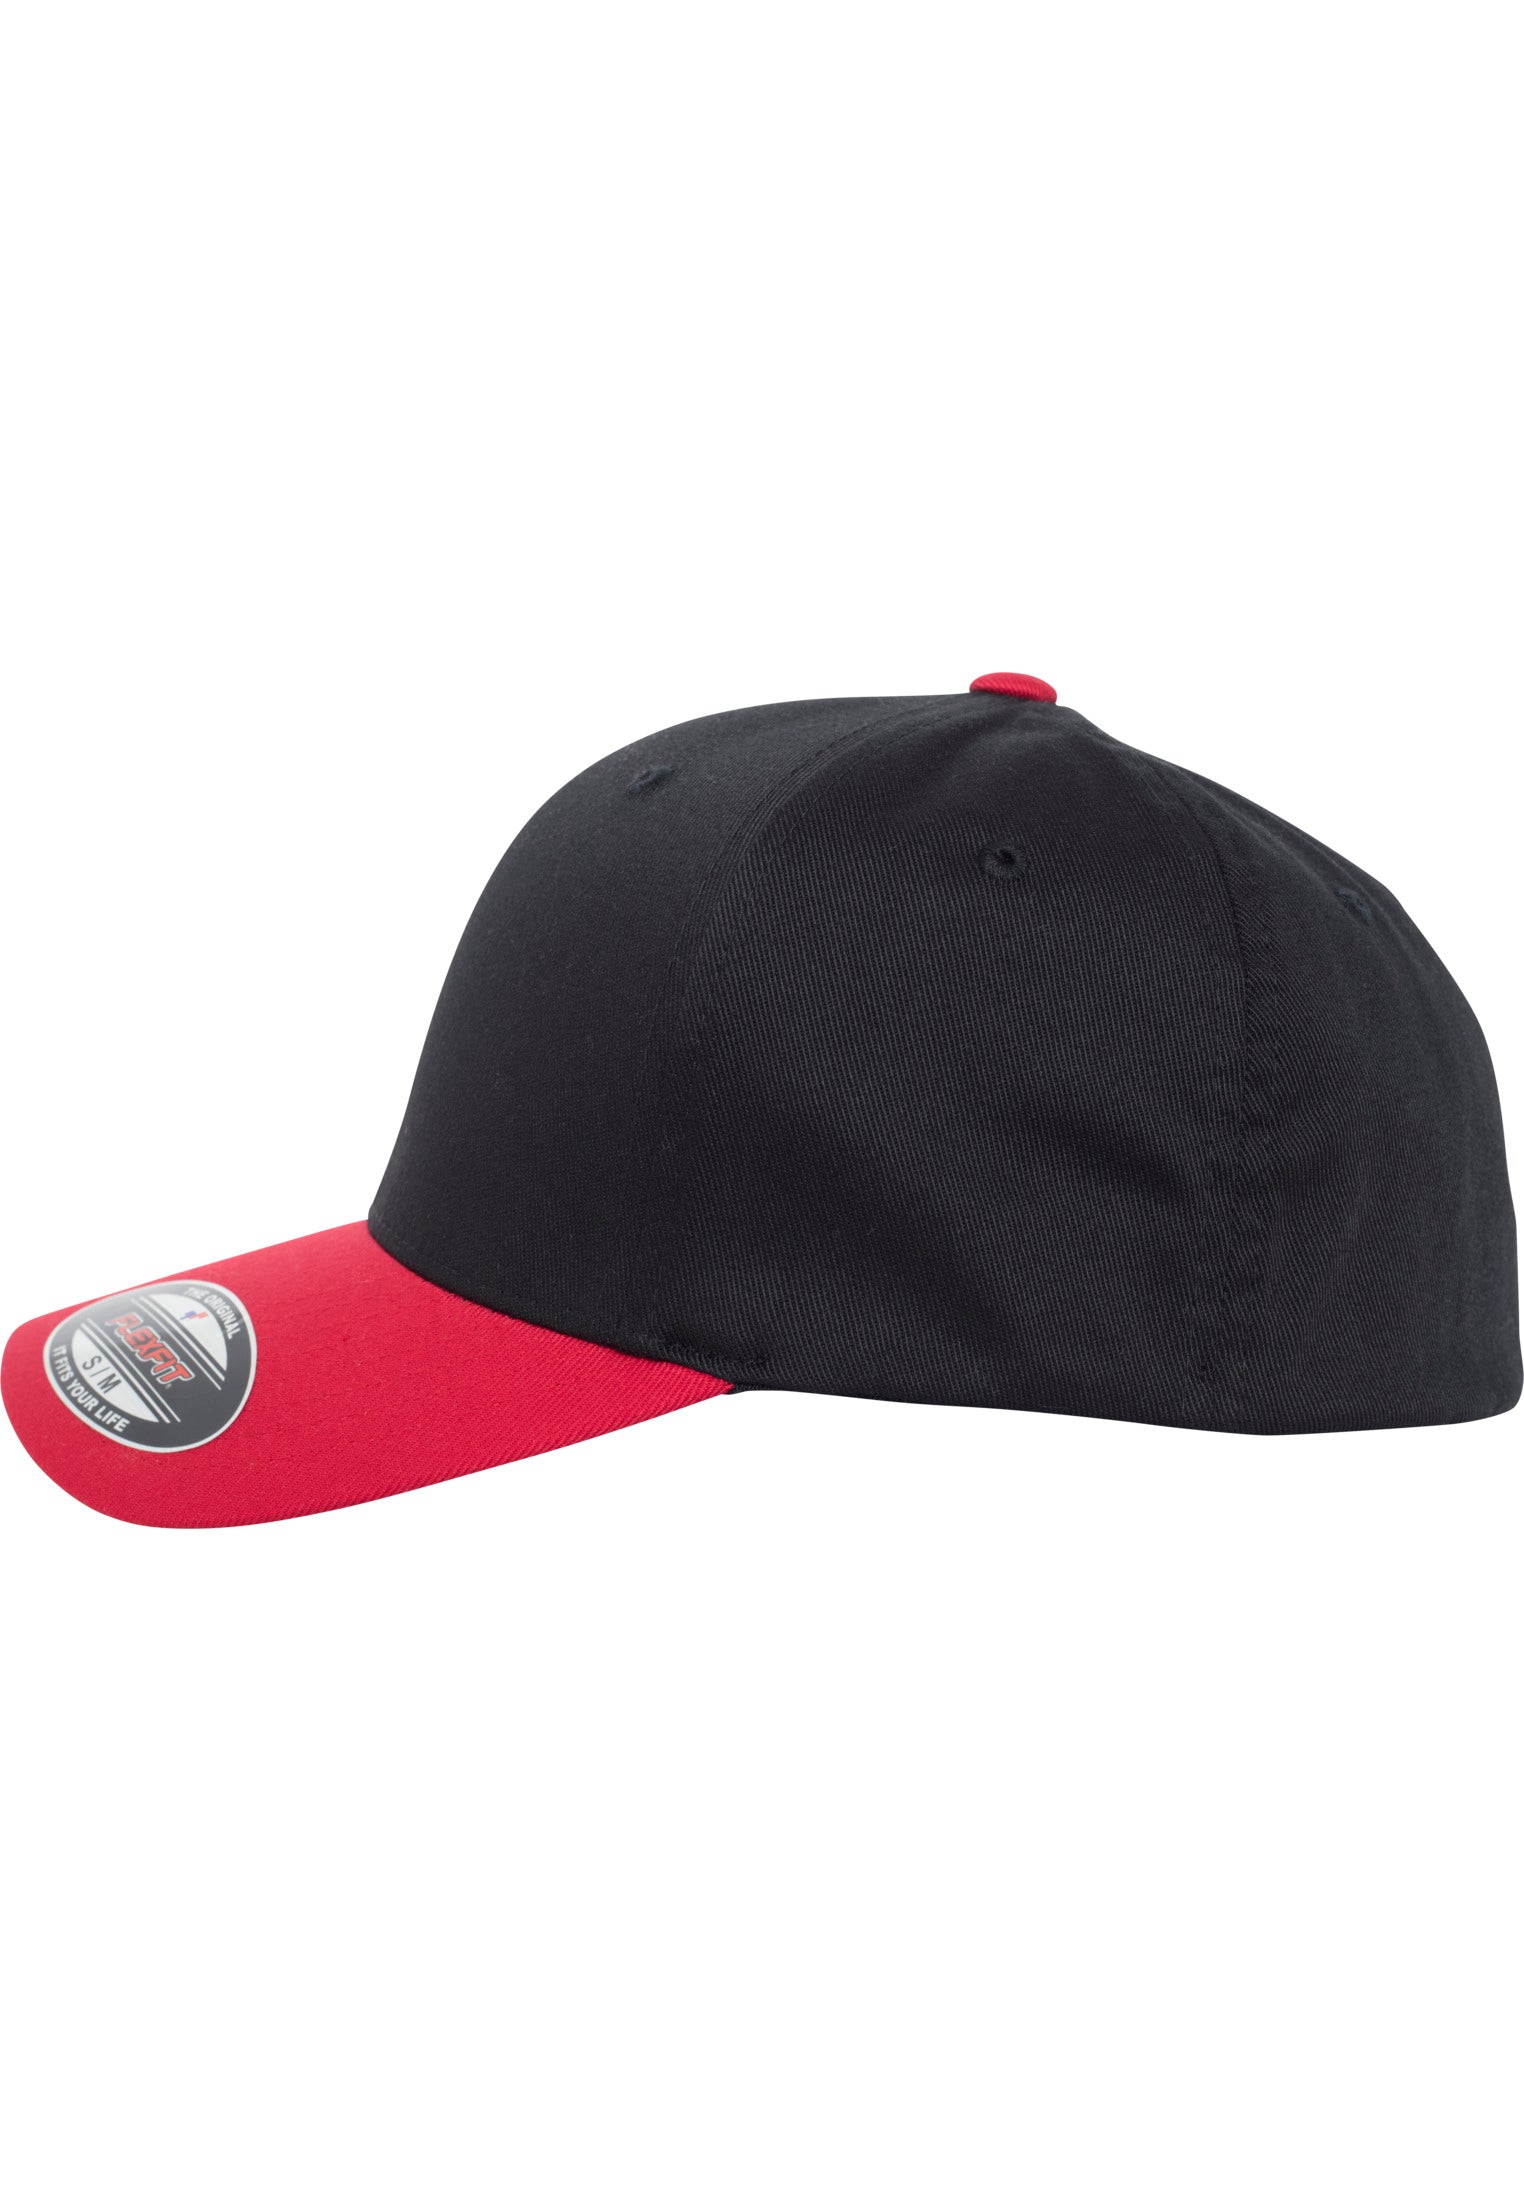 Flexfit Cap Two Tone - Black/Red - Headz Up 